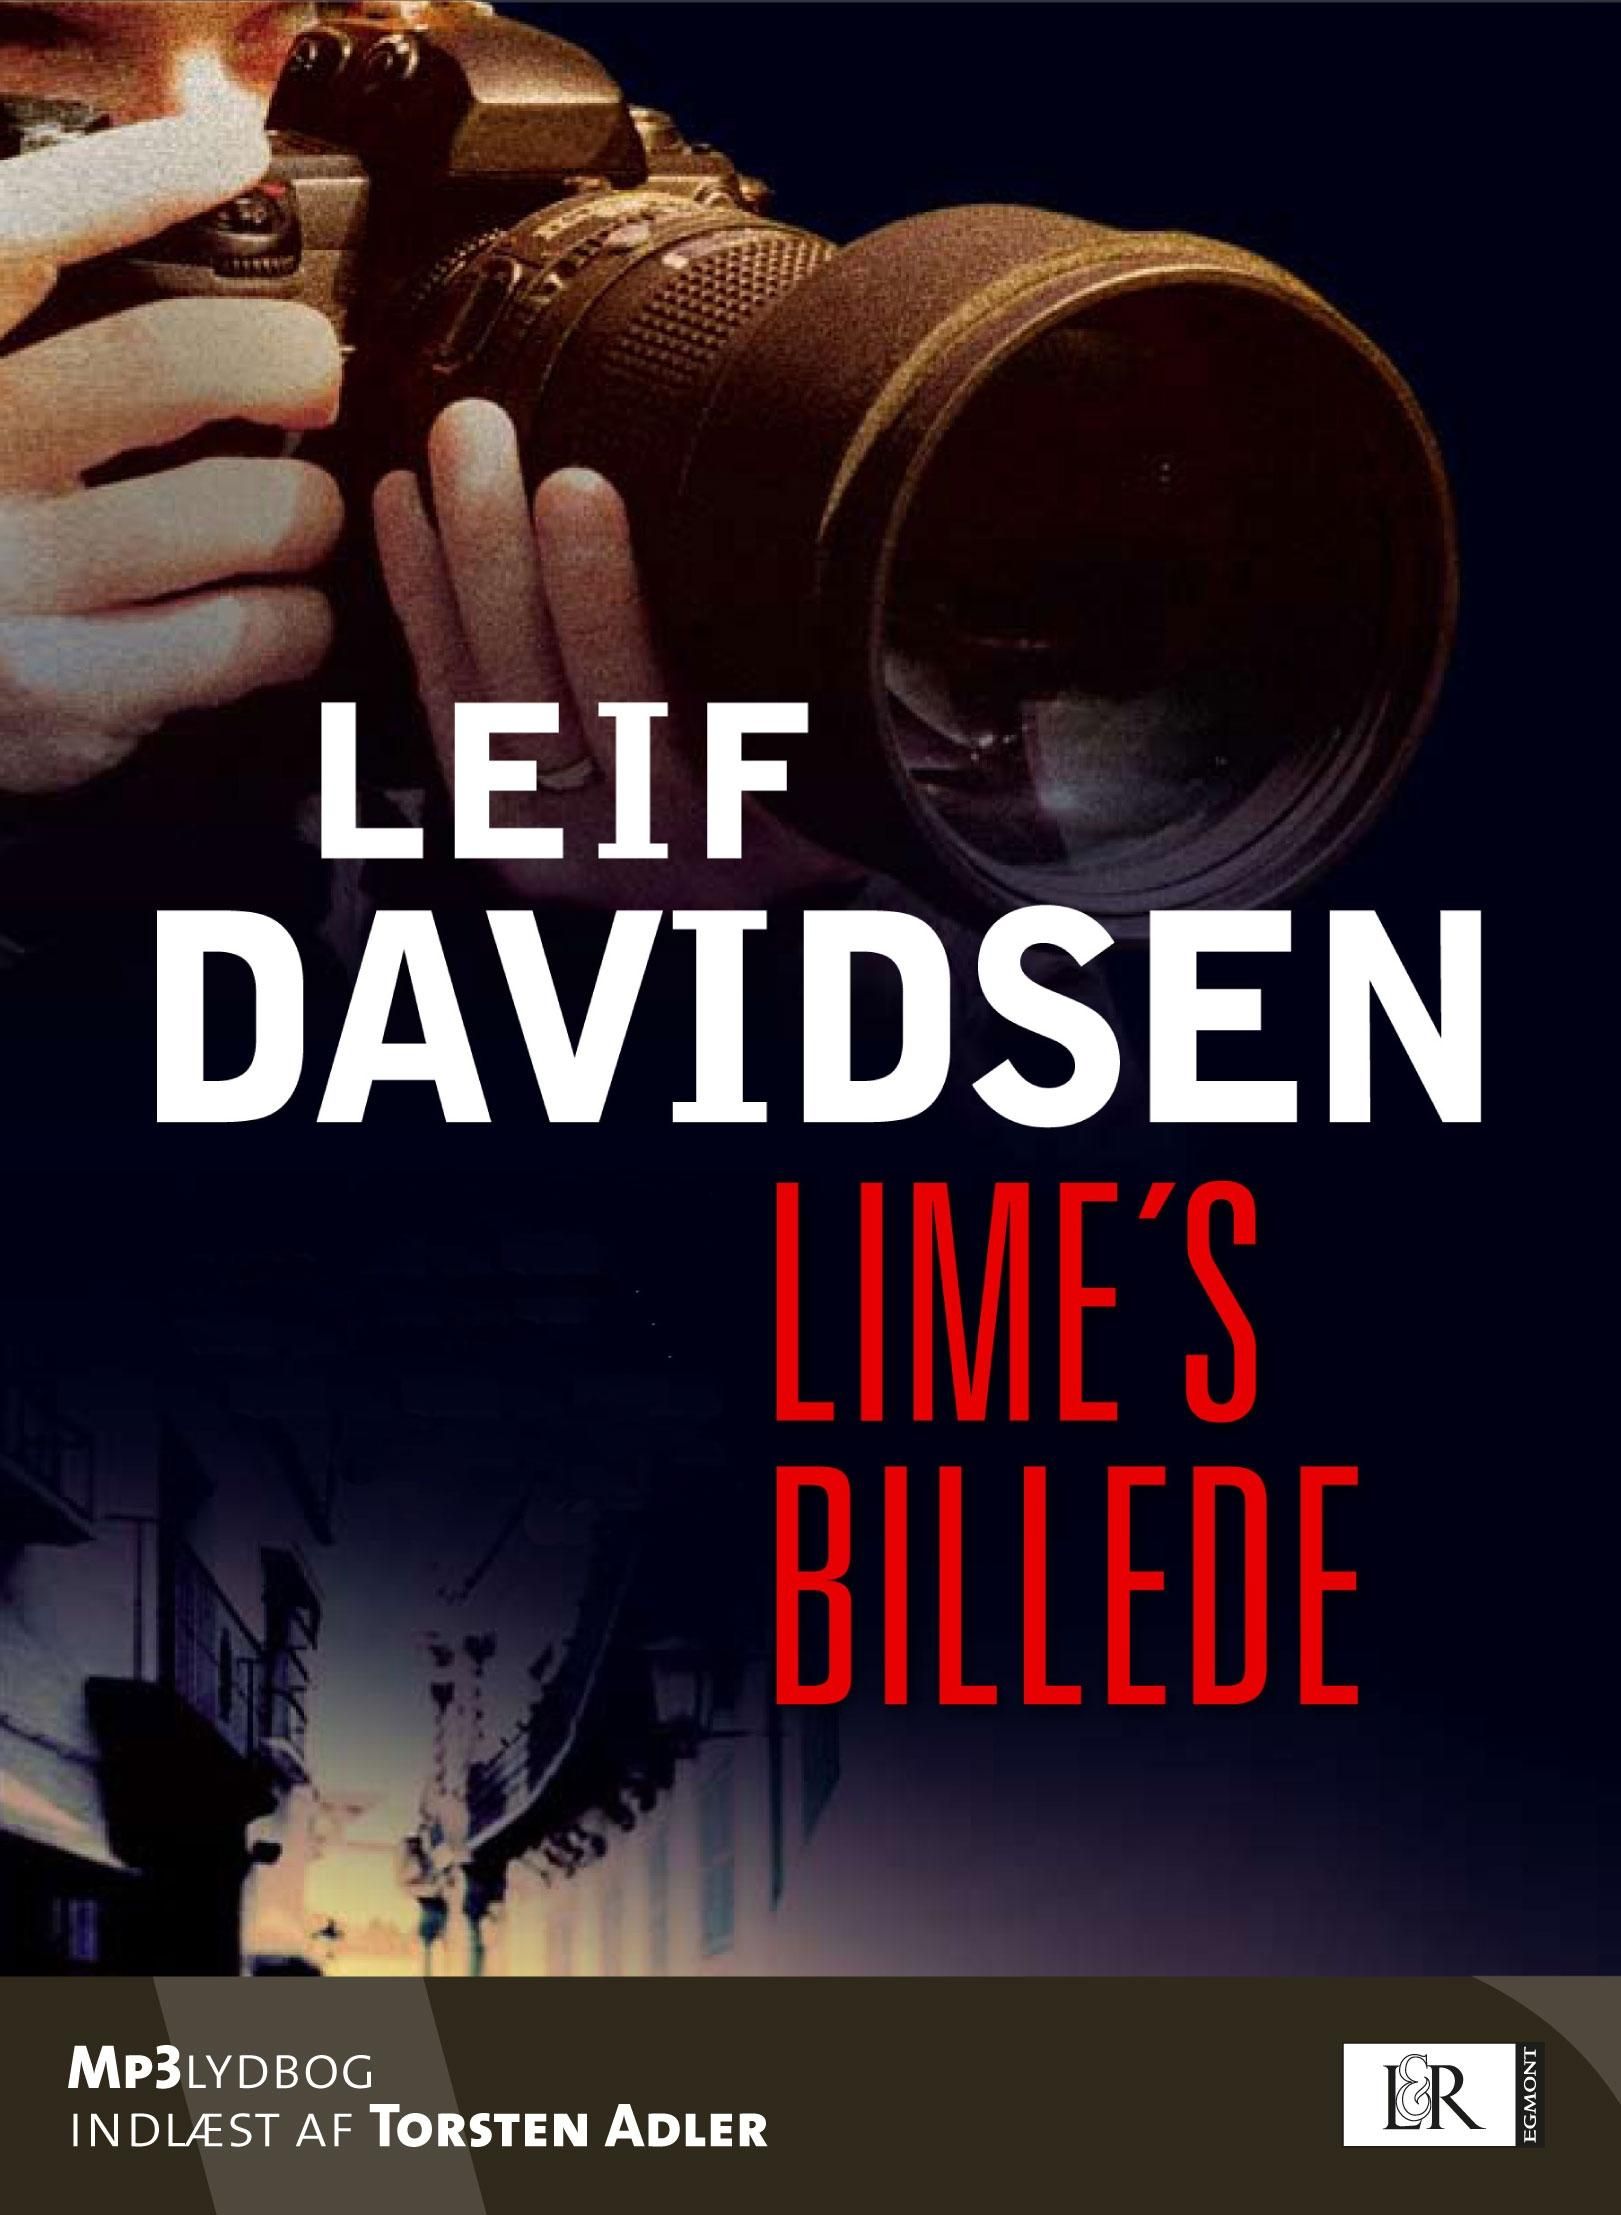 Lime's billede, audiobook by Leif Davidsen